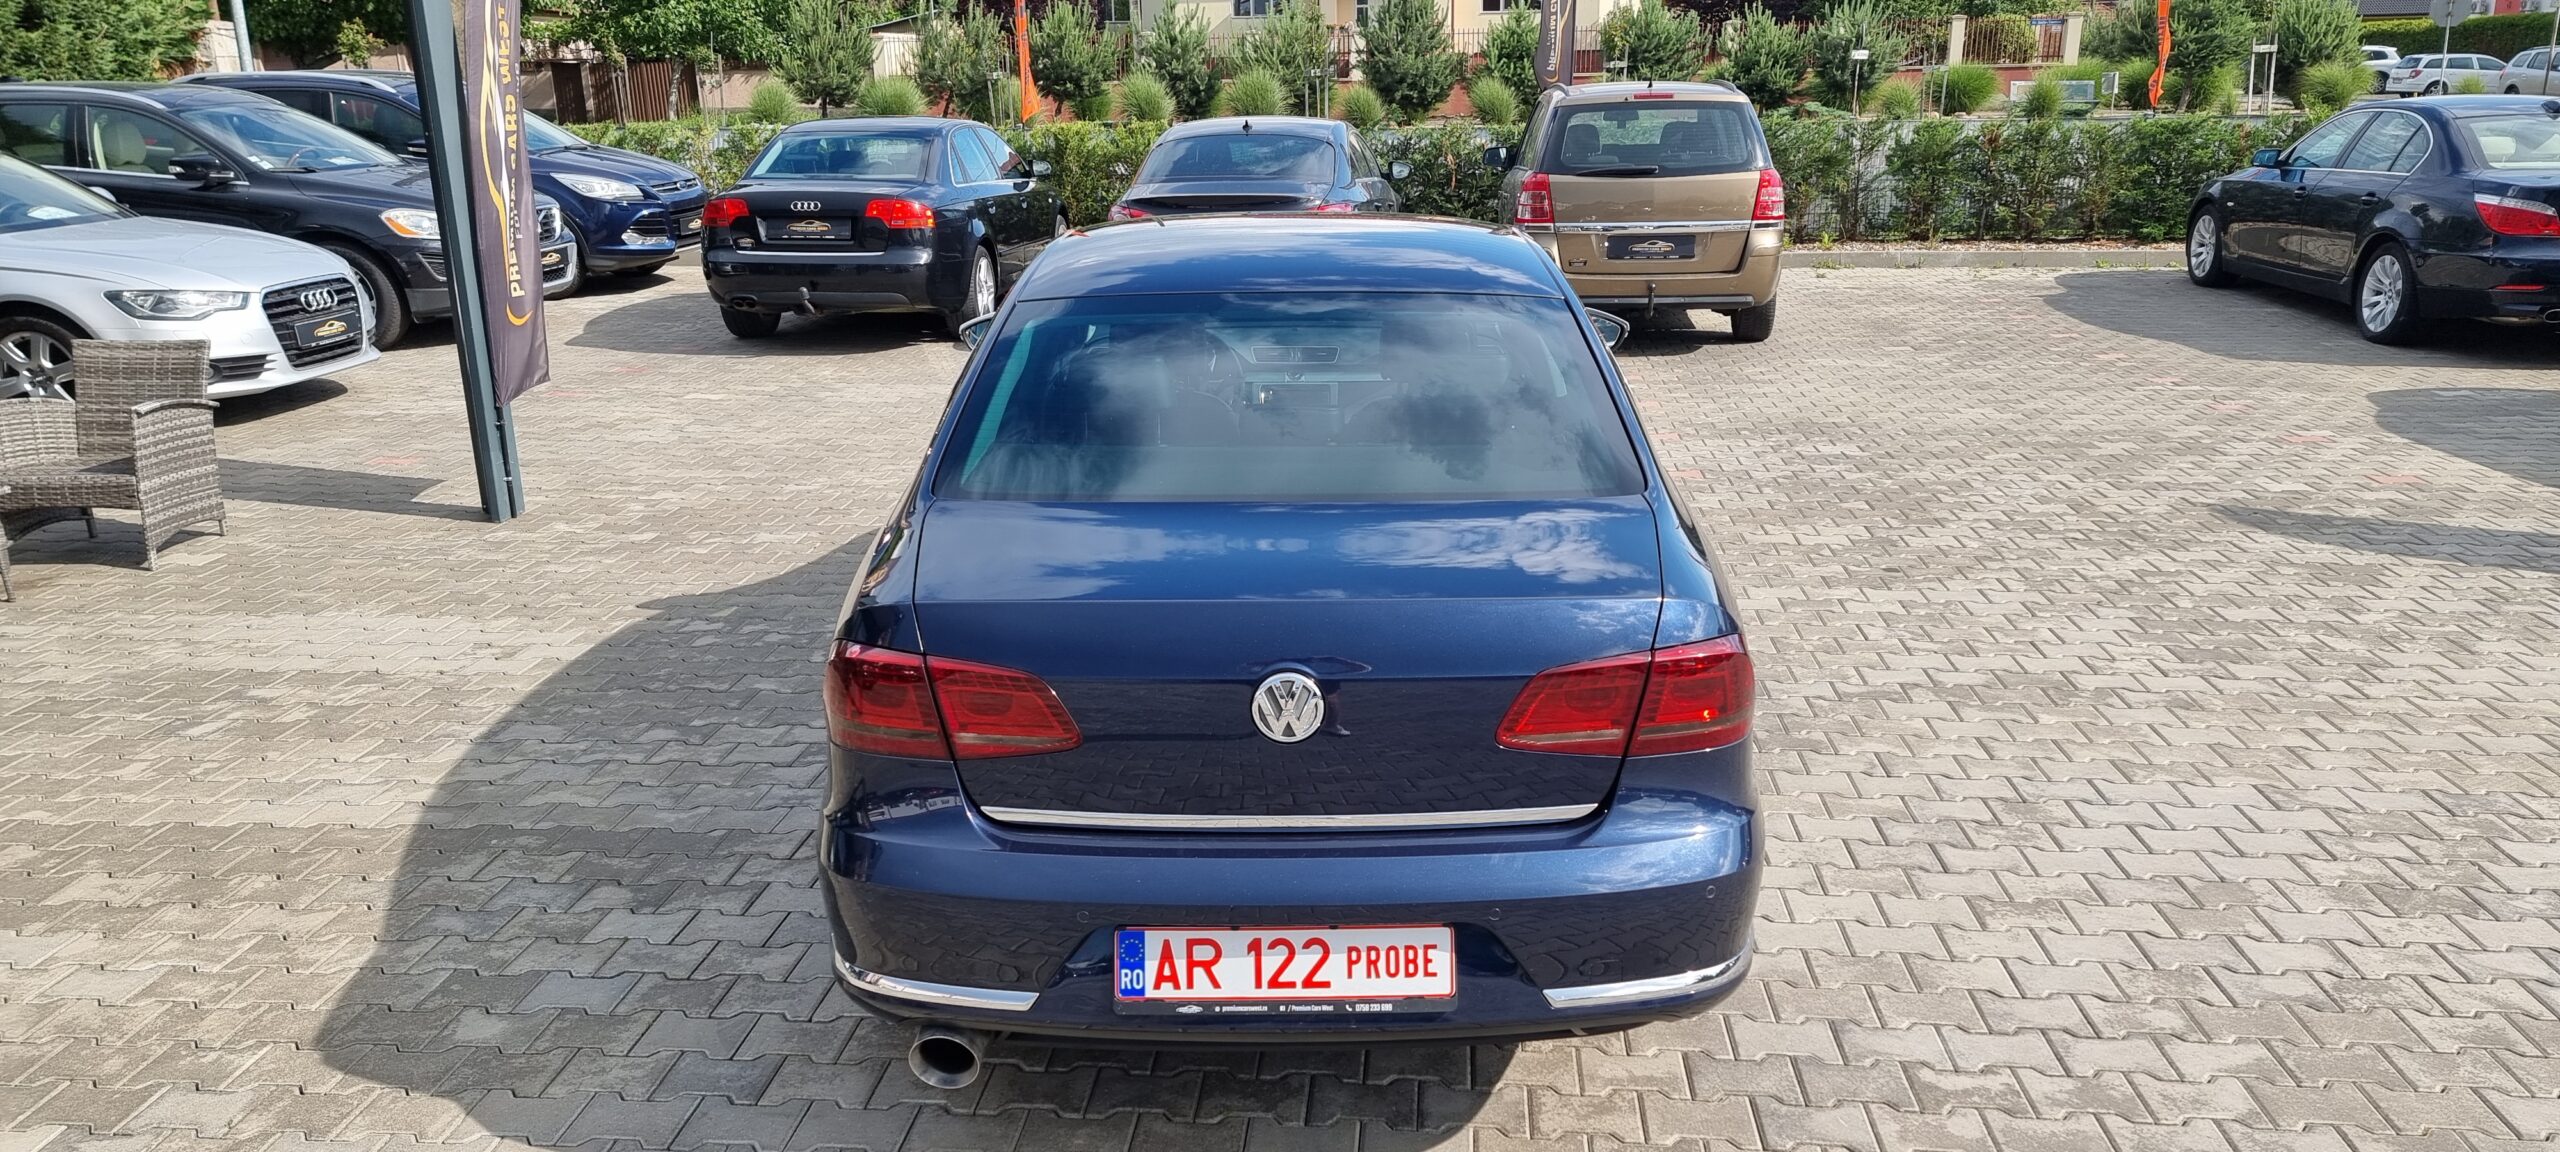 VW PASSAT 1.4 BENZINA